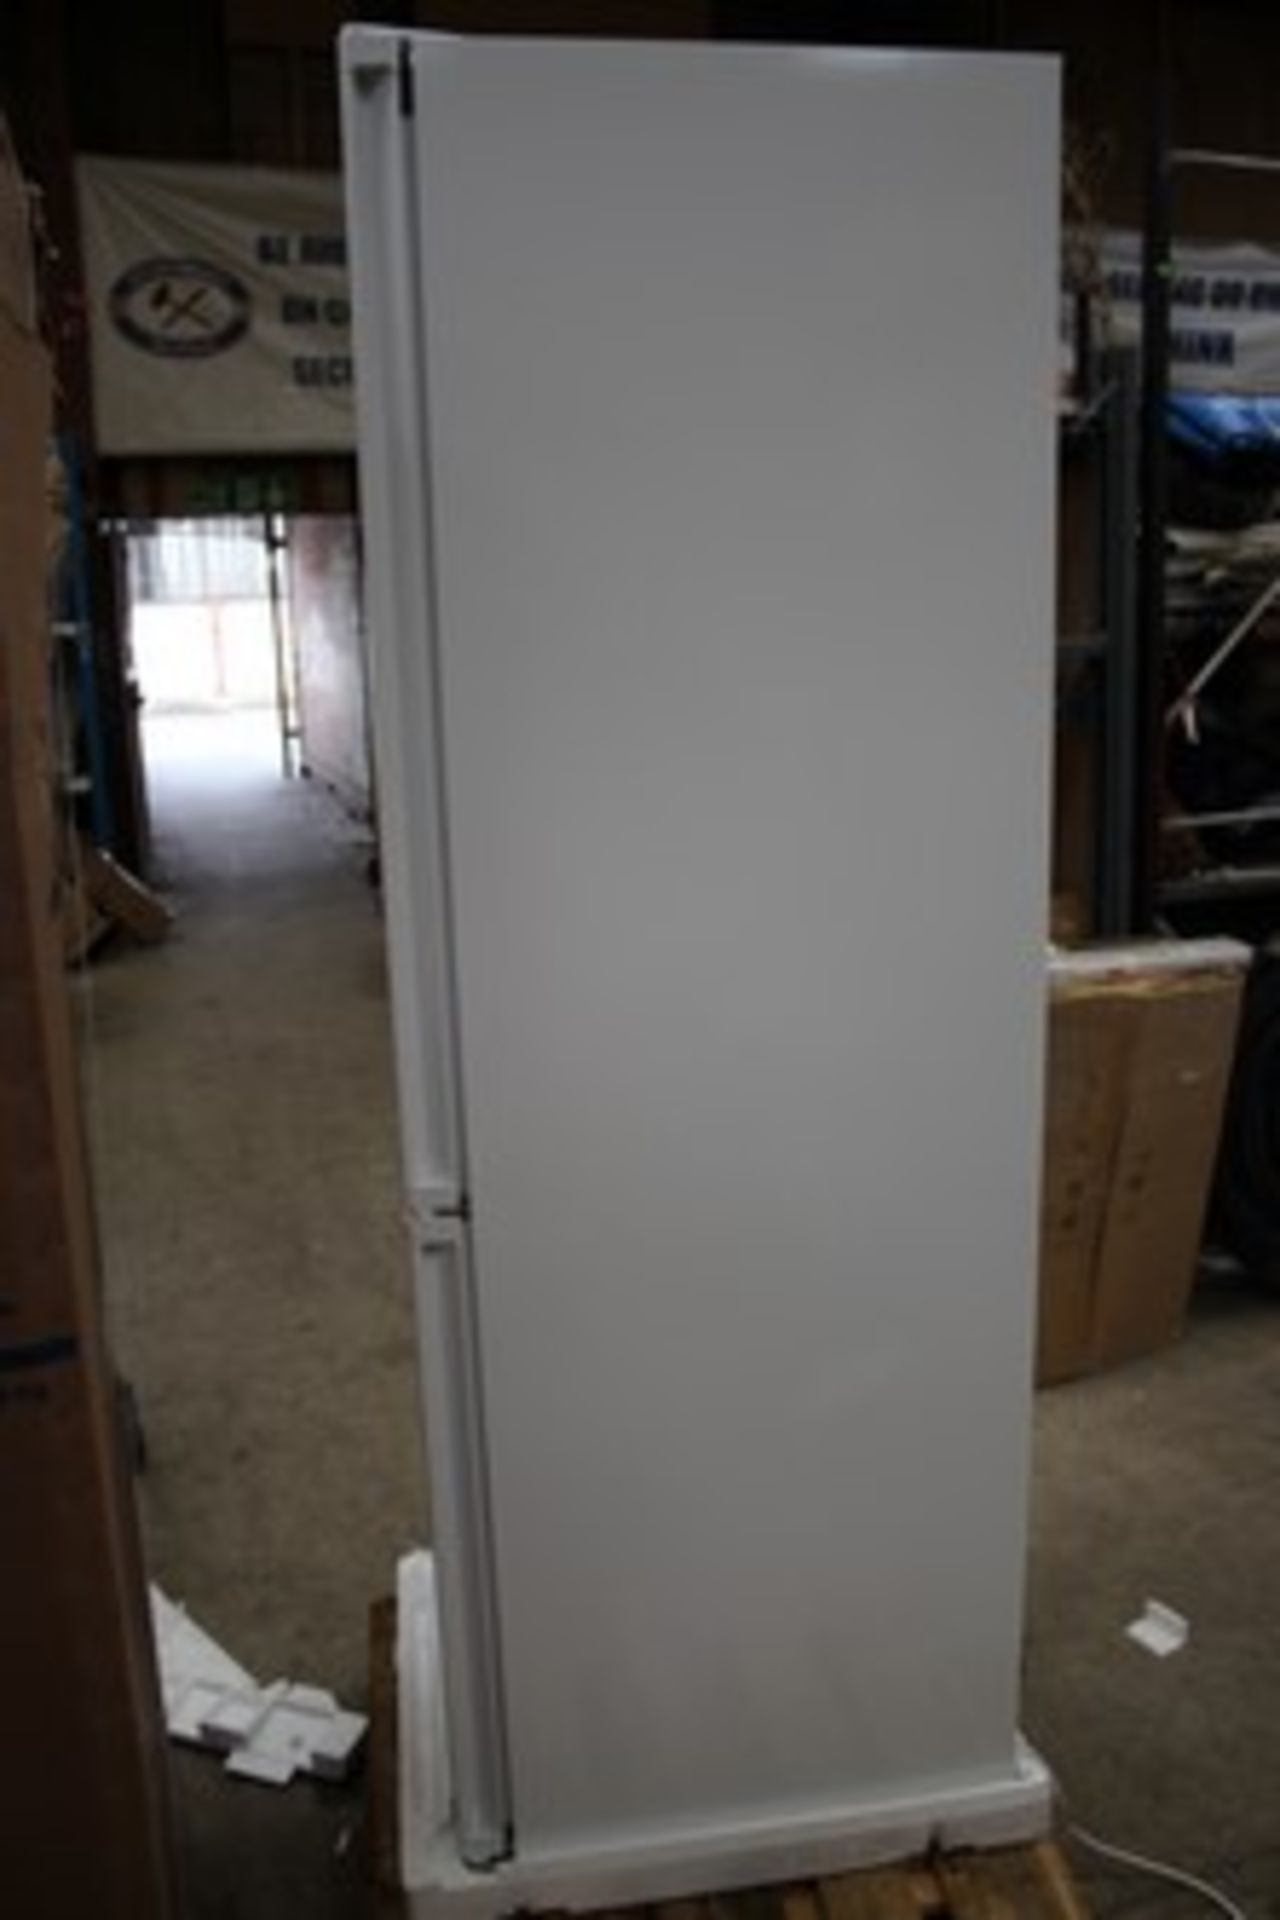 1 x Bosch frost free freestanding fridge freezer -white, model: KGN362WDFG, grade B no damage, - Image 5 of 5